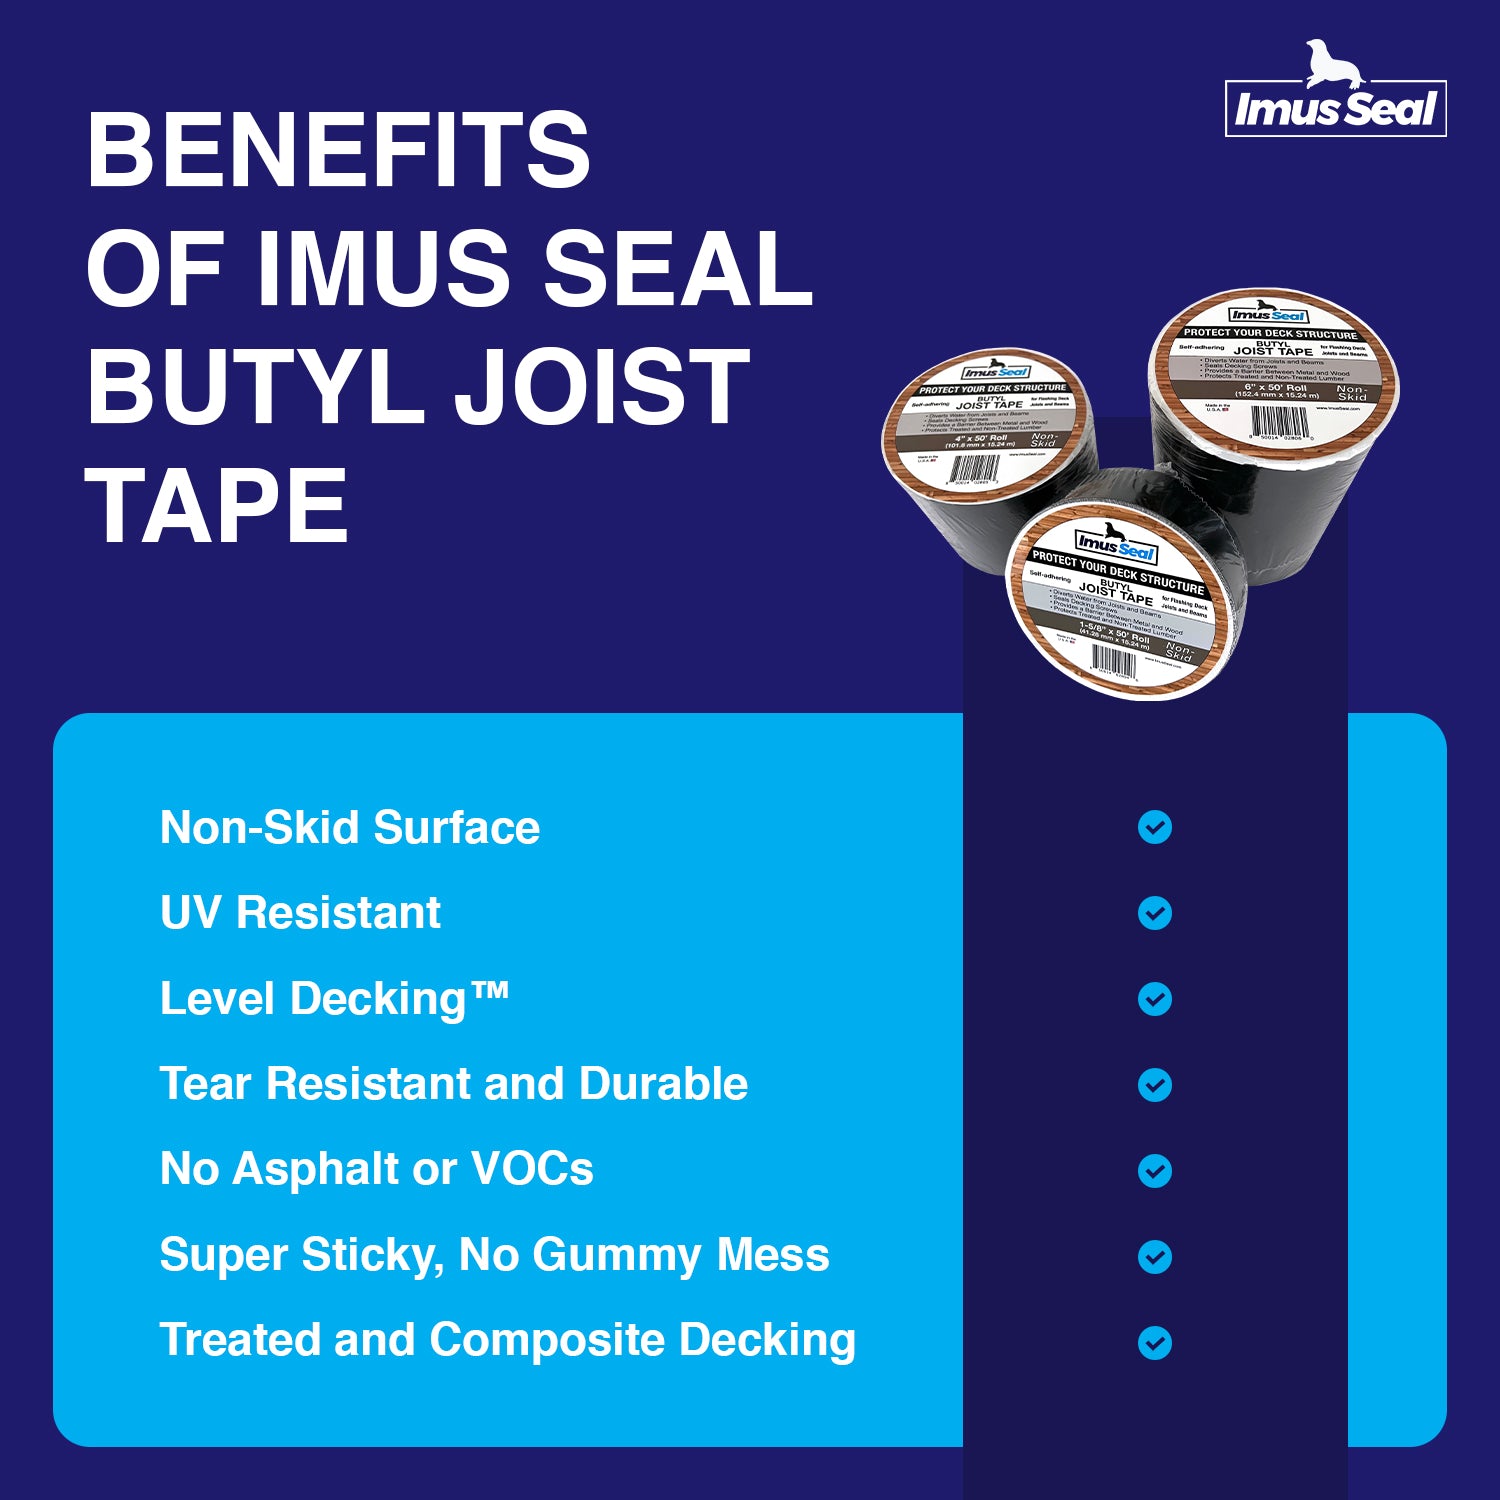 Imus Seal Butyl Joist Tape Non-Skid Benefits Infographic